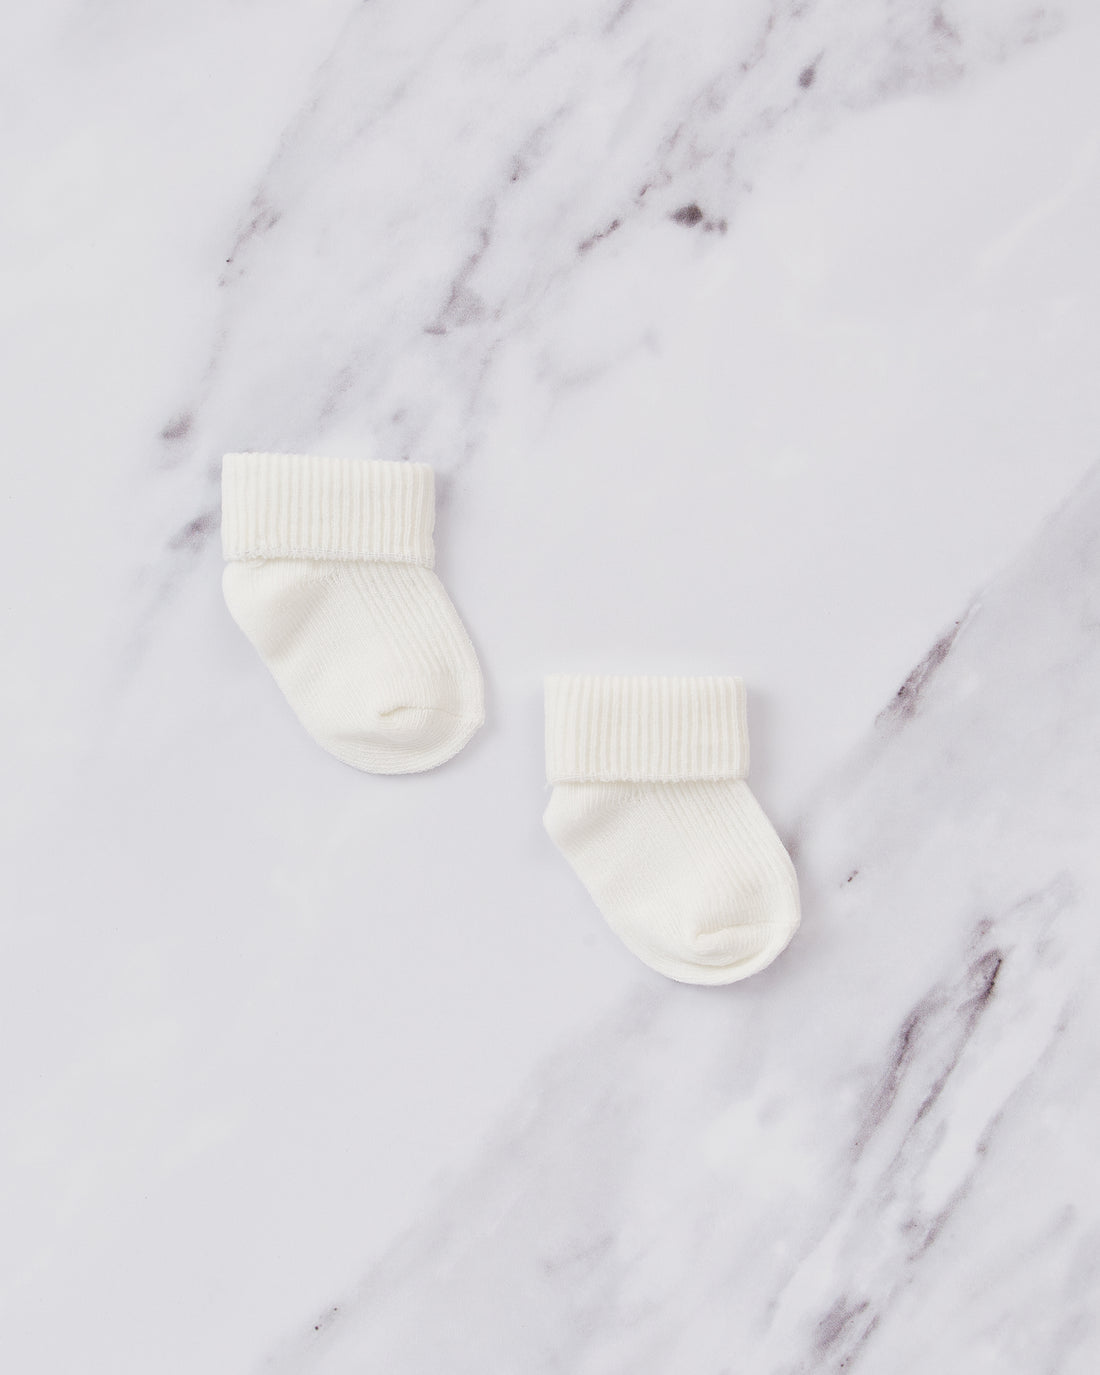 Turnover white baby cotton socks. 